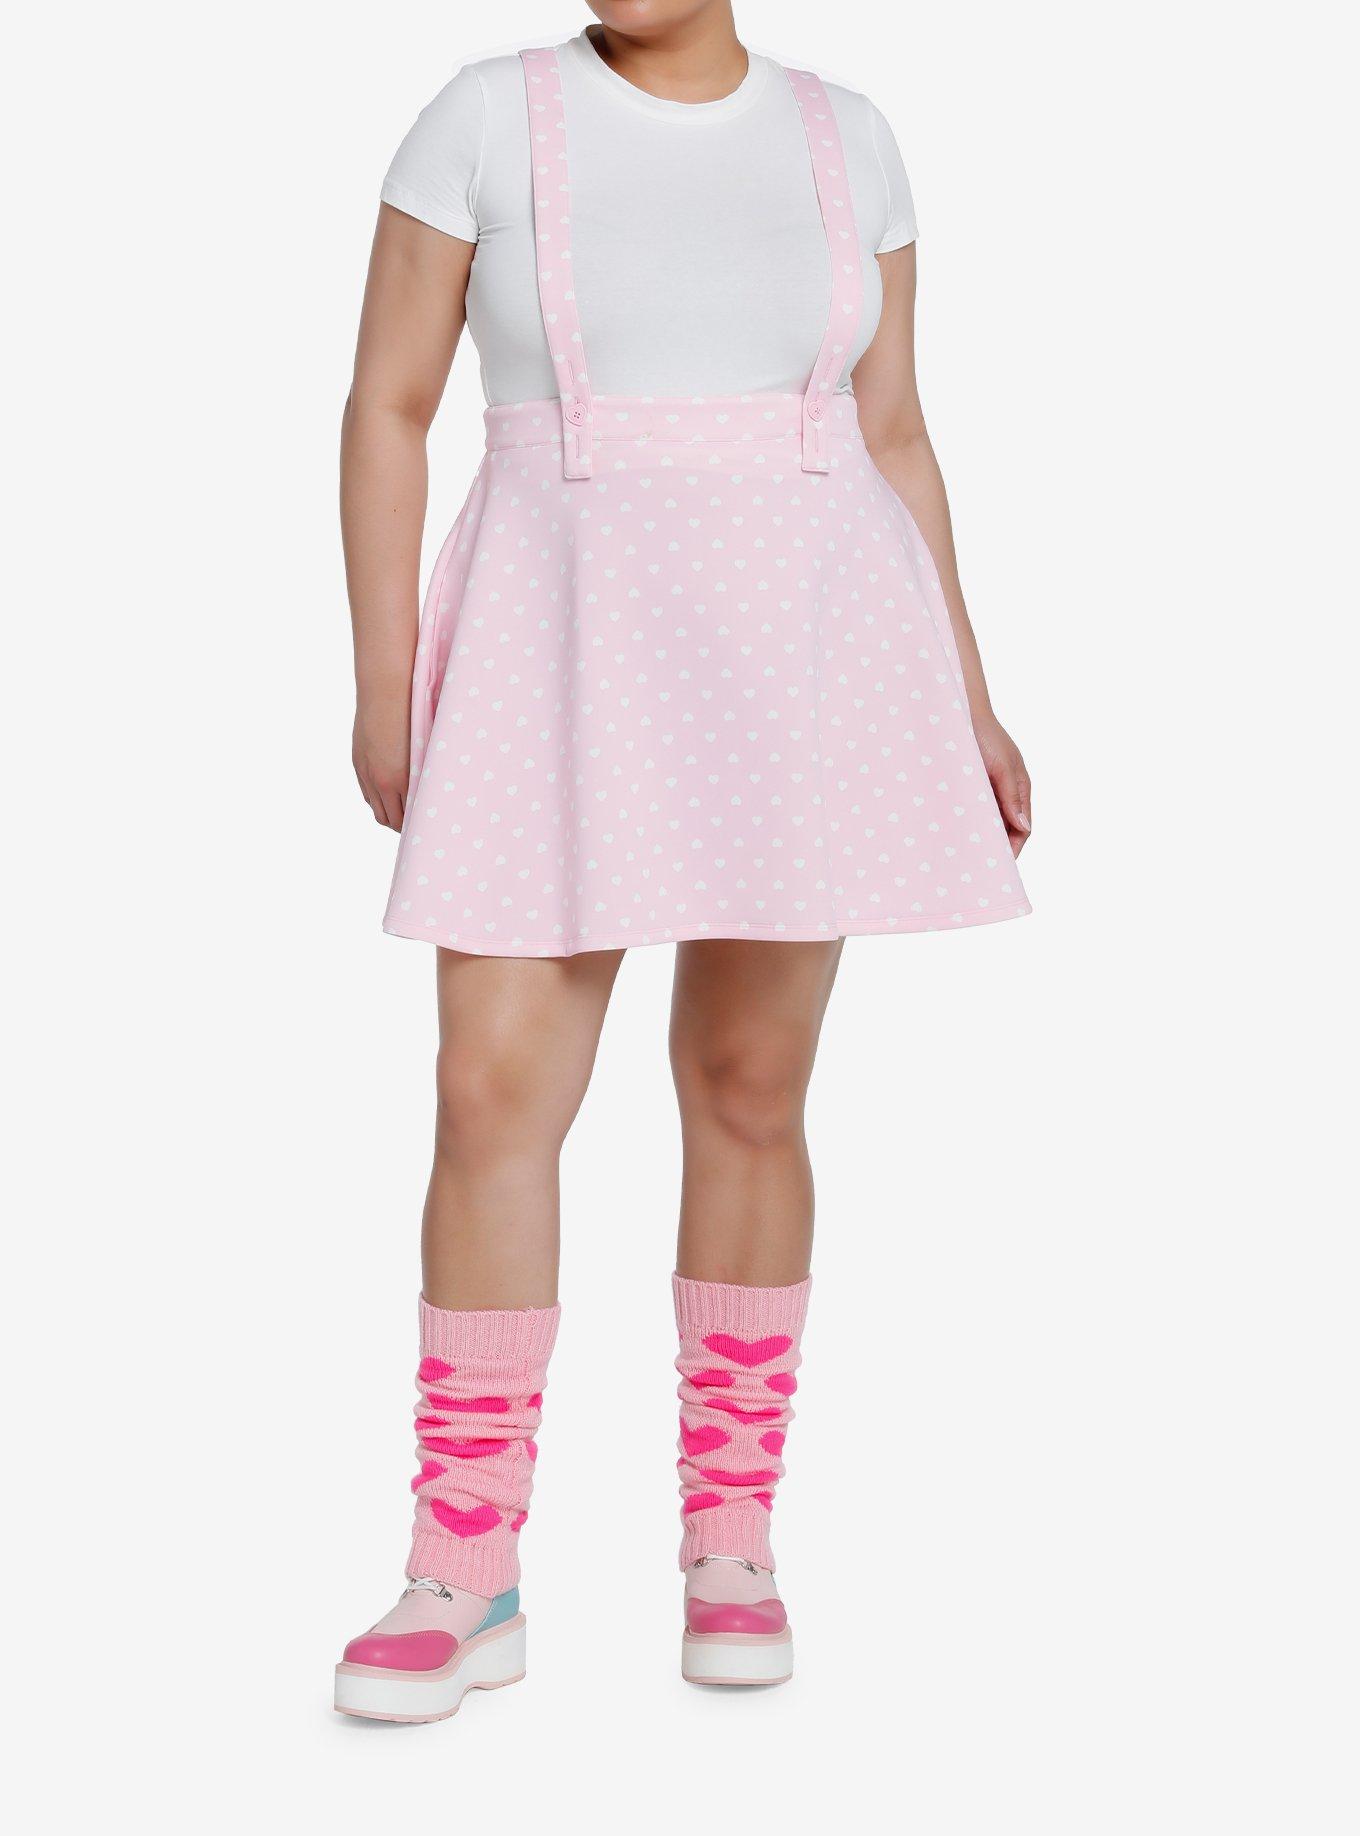 Sweet Society Pink & White Heart Bow Suspender Skirt Plus Size, PINK, alternate